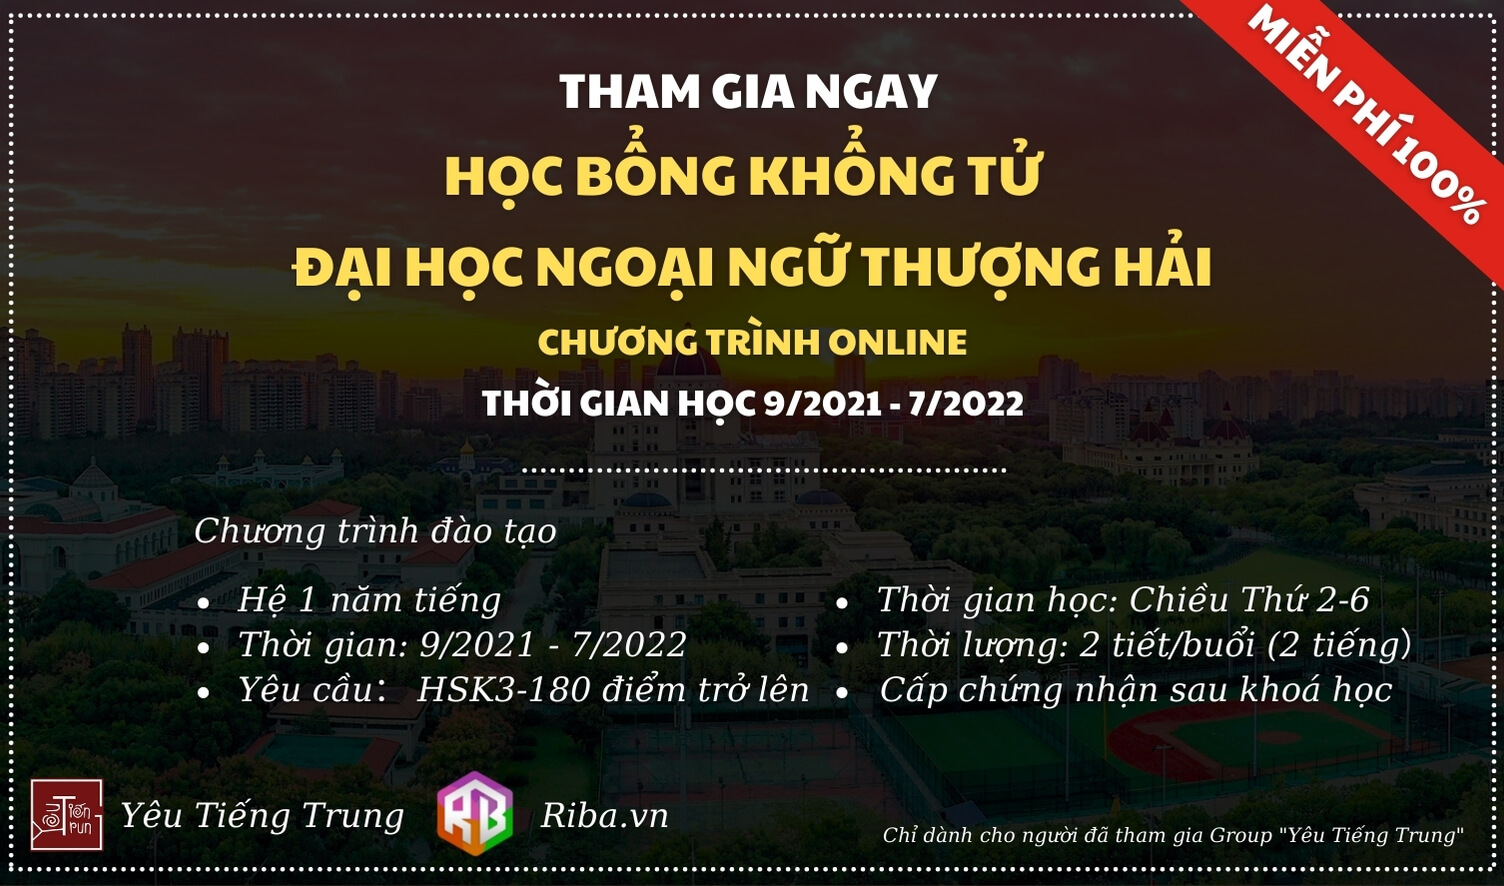 Hoc bong Khong Tu Dai hoc Ngoai ngu Thuong Hai 1